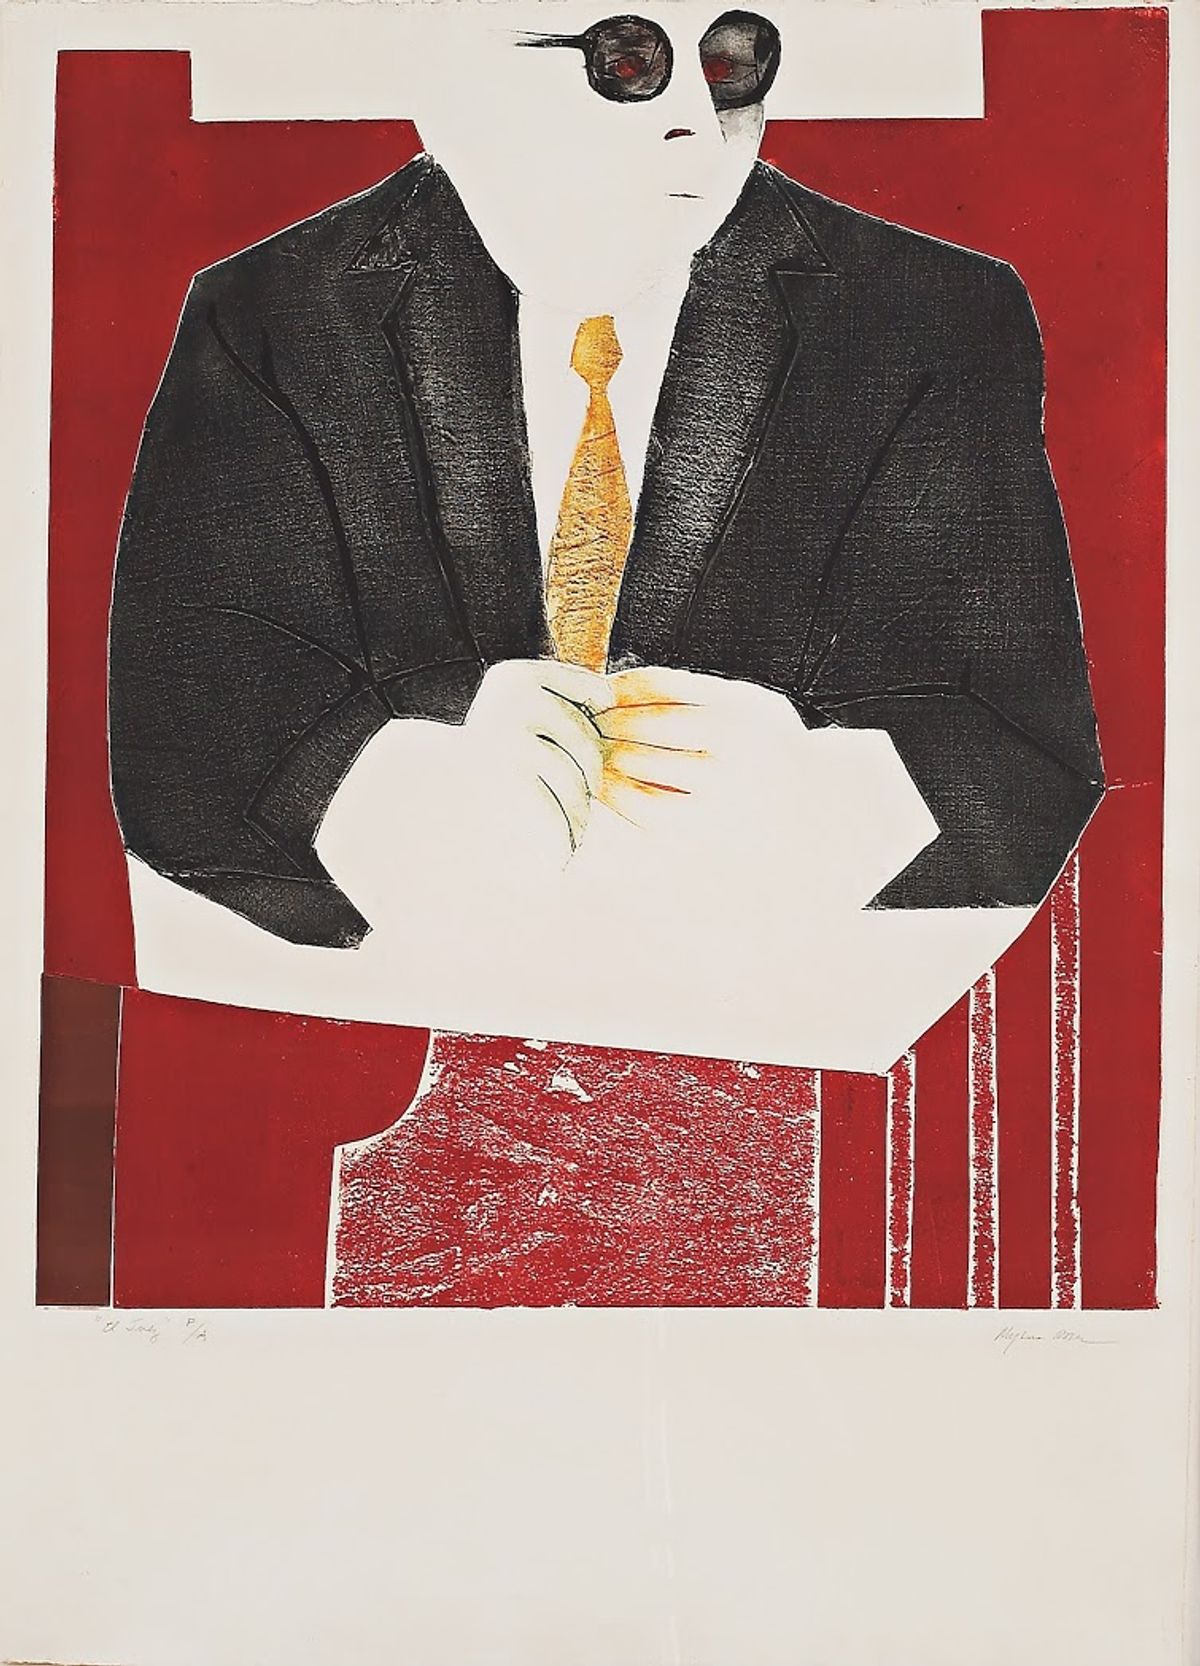 The Judge (1970), a collograph print by Myrna Báez Museo de Arte Contemporáneo de Puerto Rico